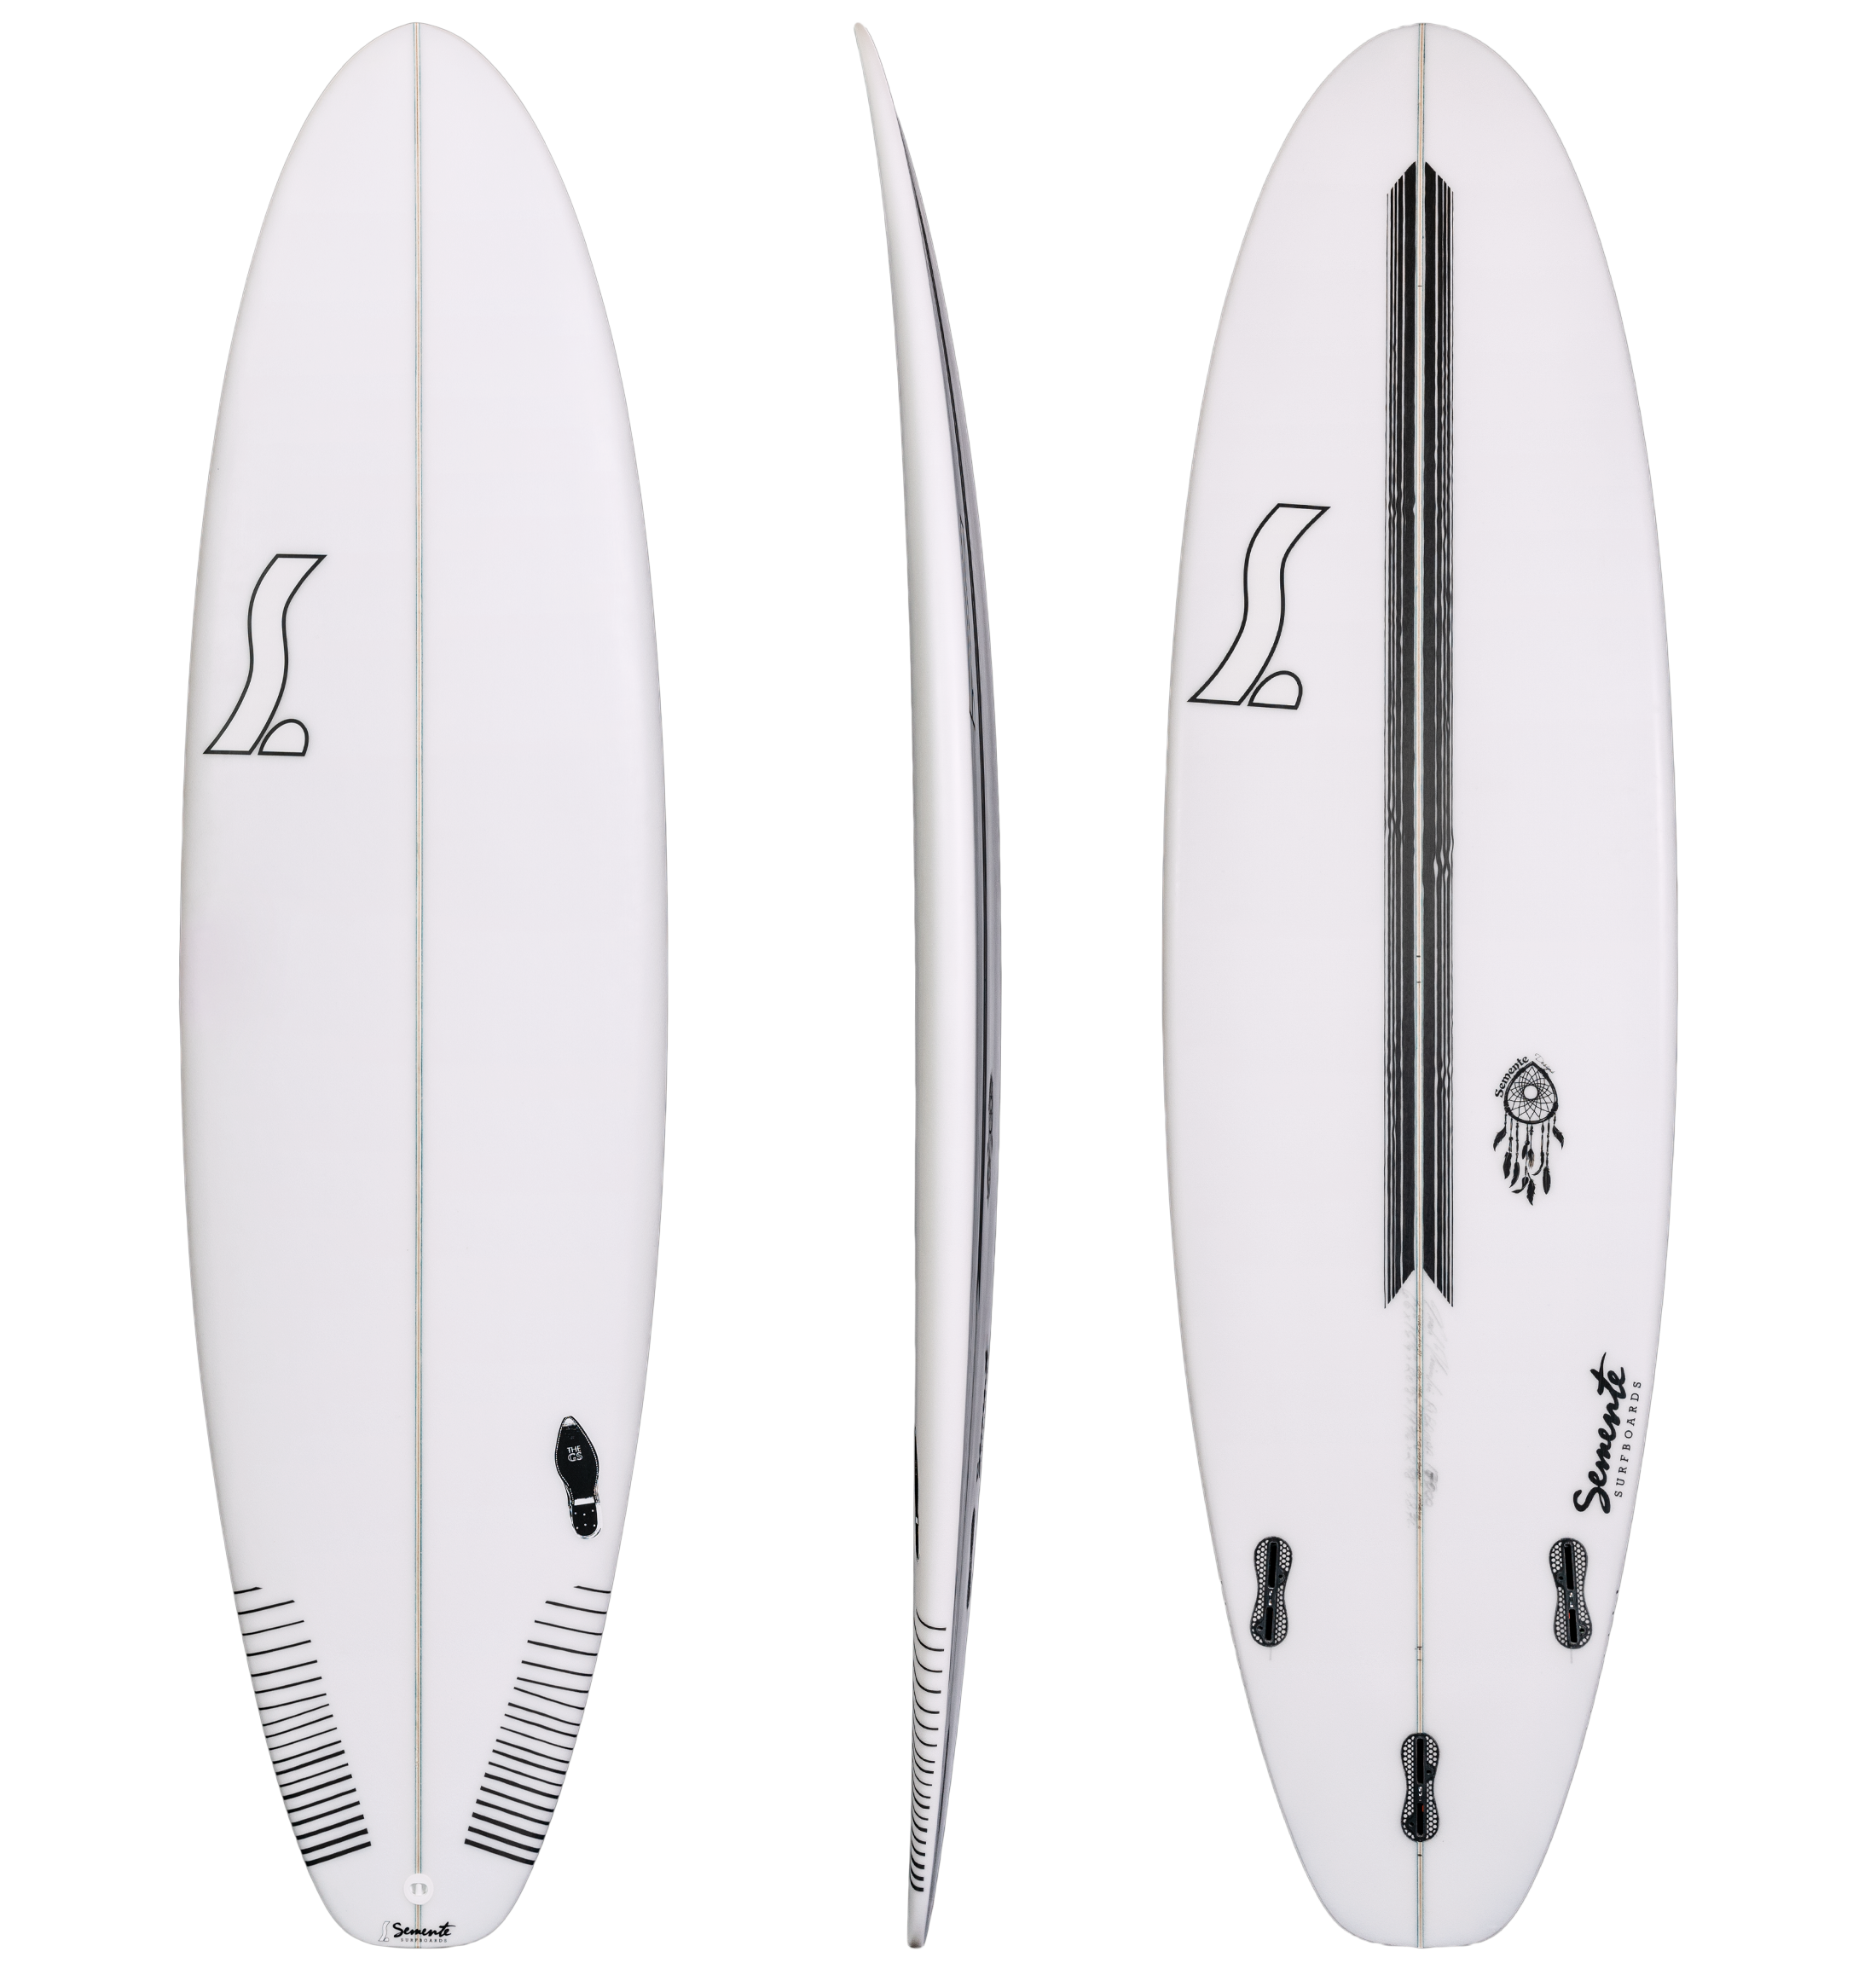 Gunslinger surfboard model semente